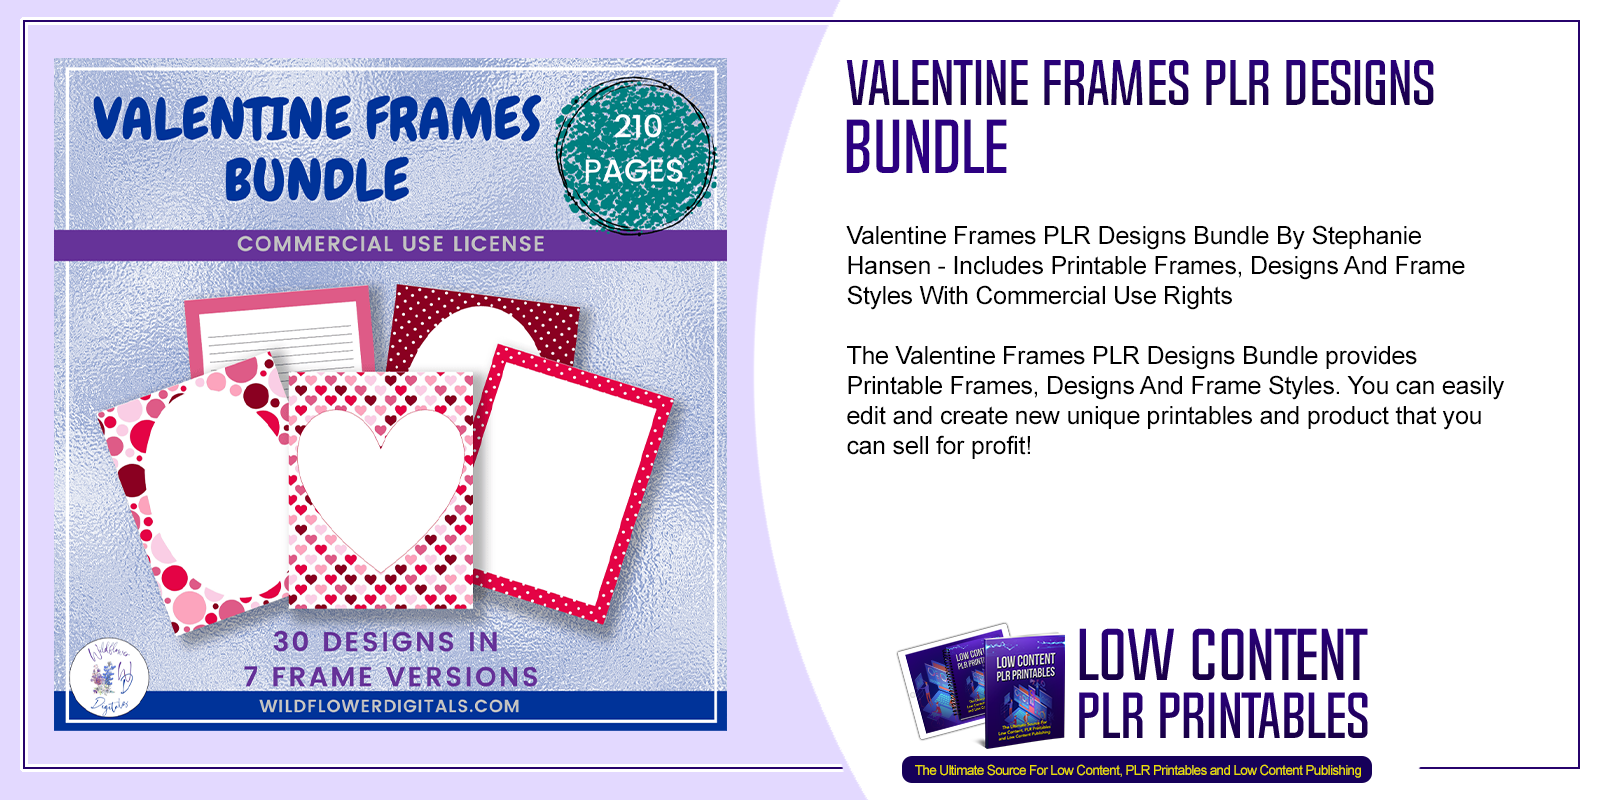 Valentine Frames PLR Designs Bundle